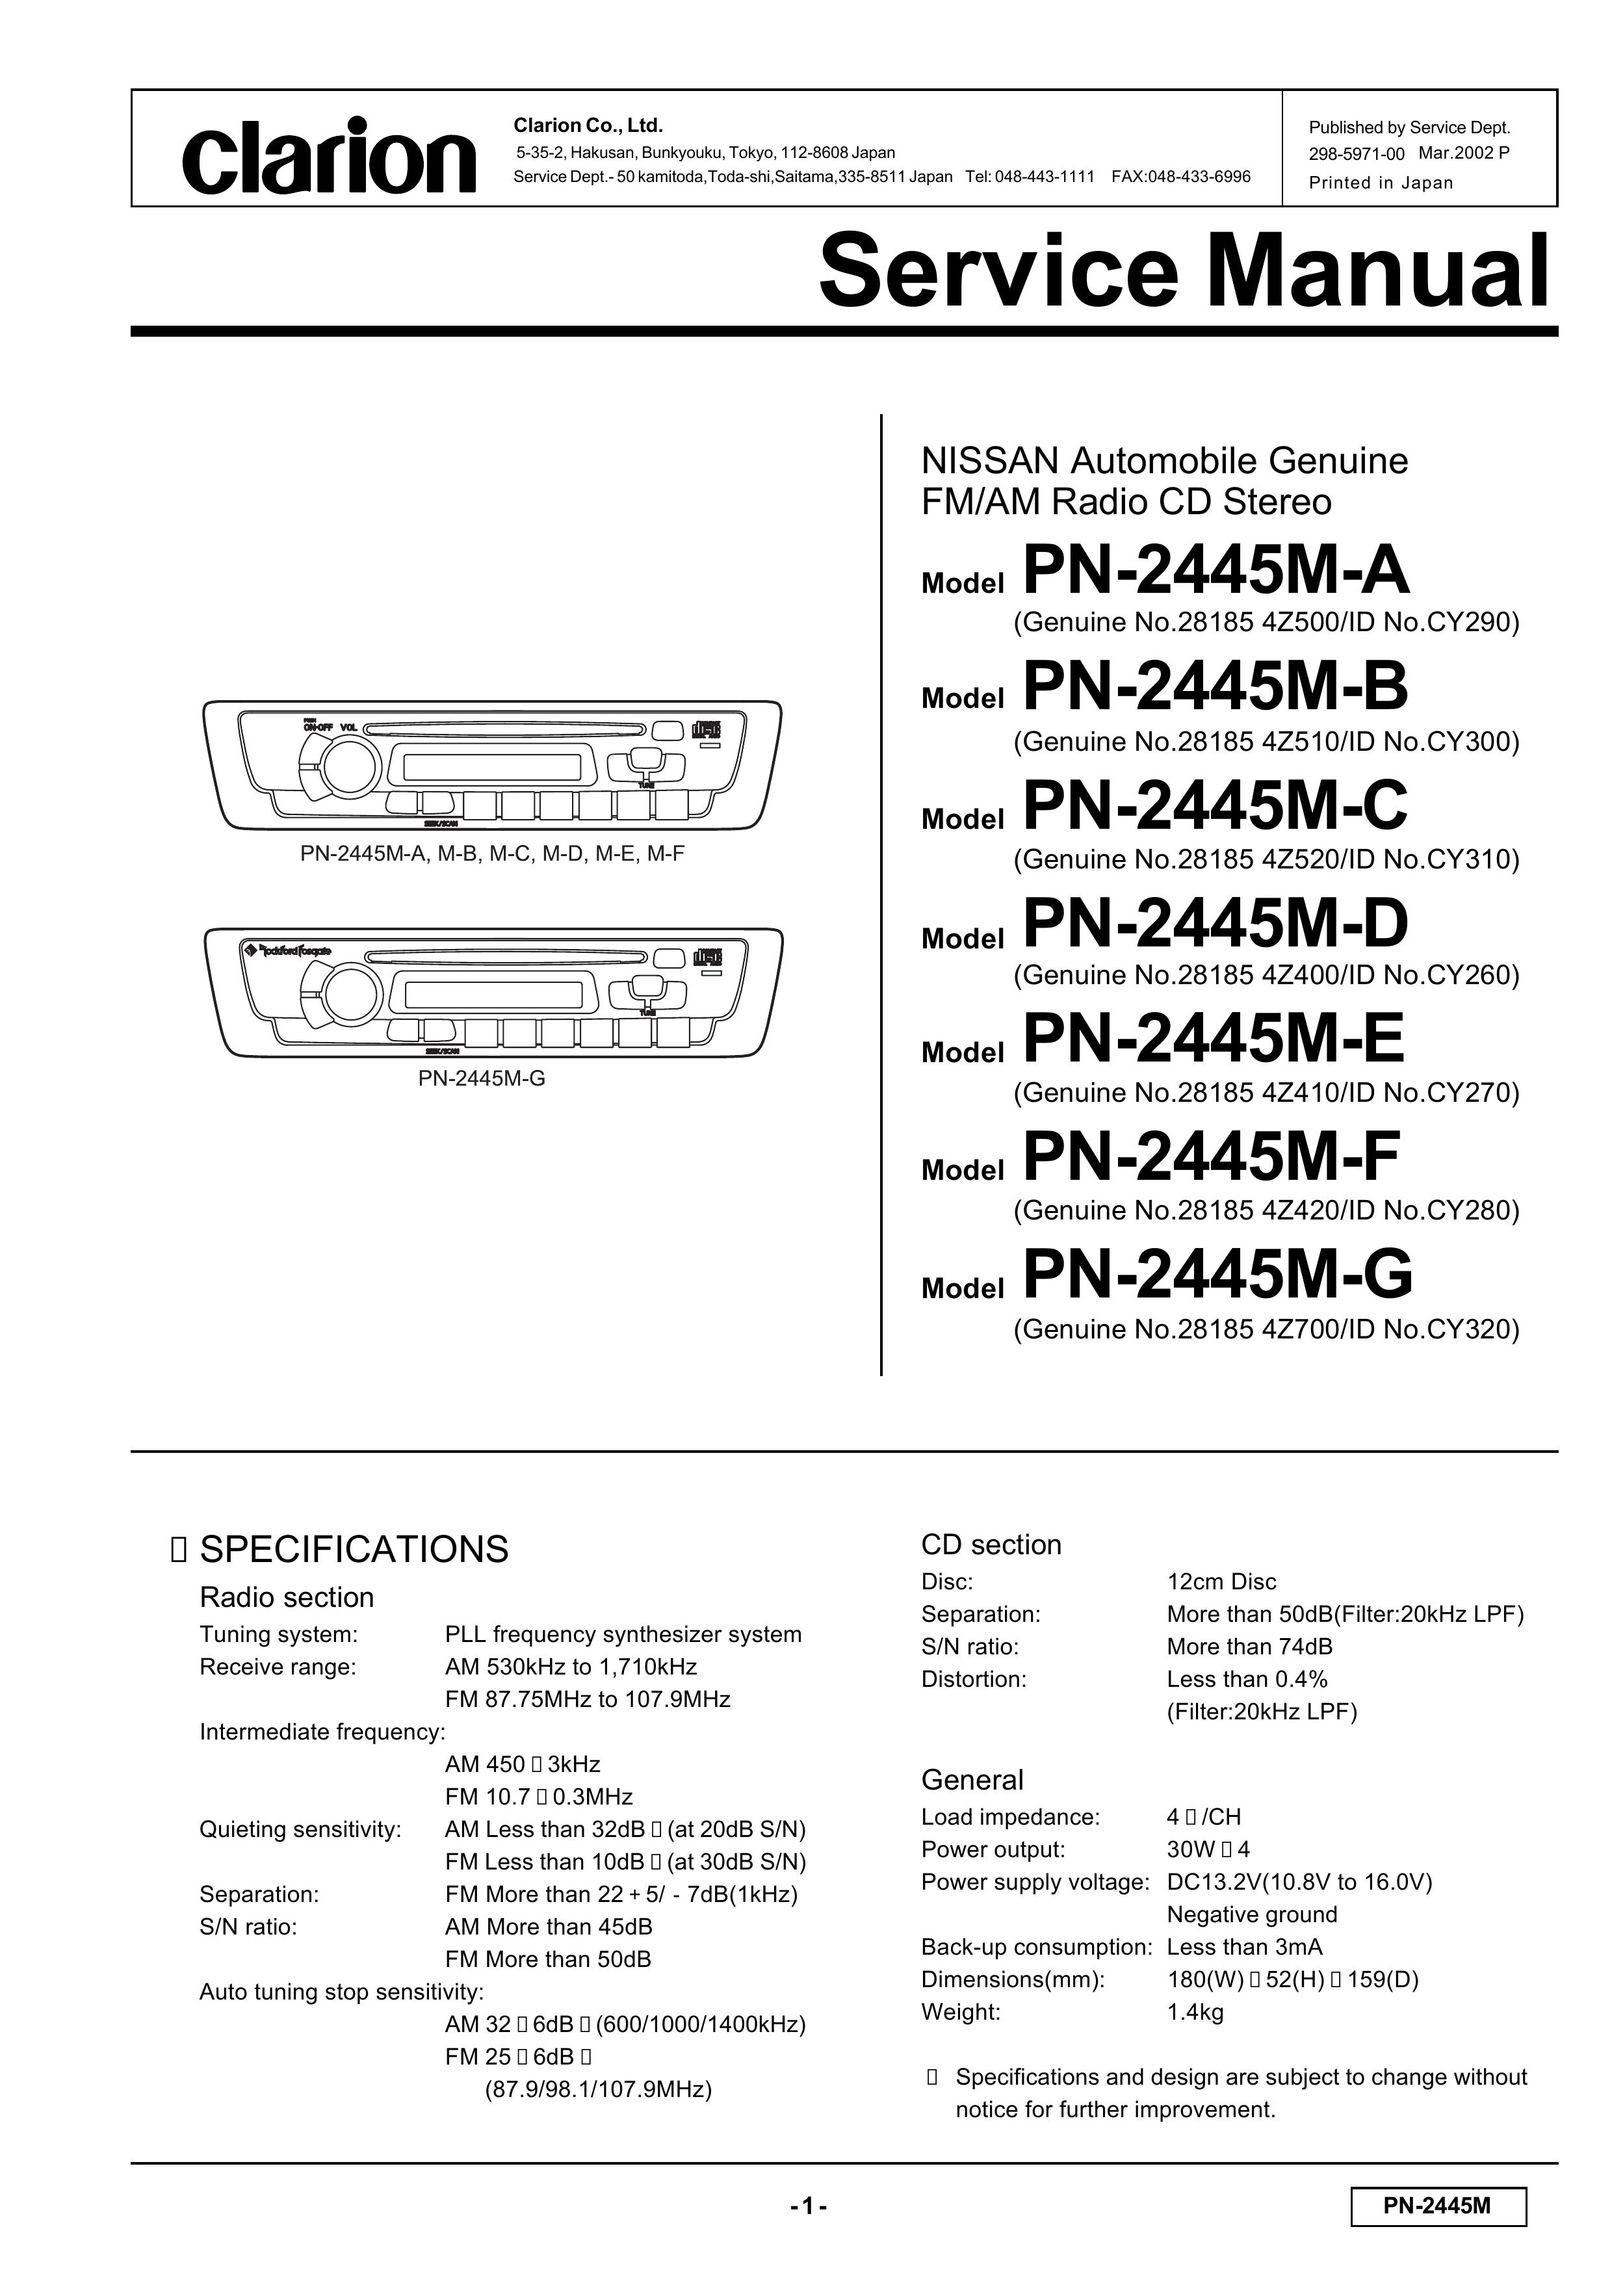 Clarion PN-2445M-G Radio User Manual